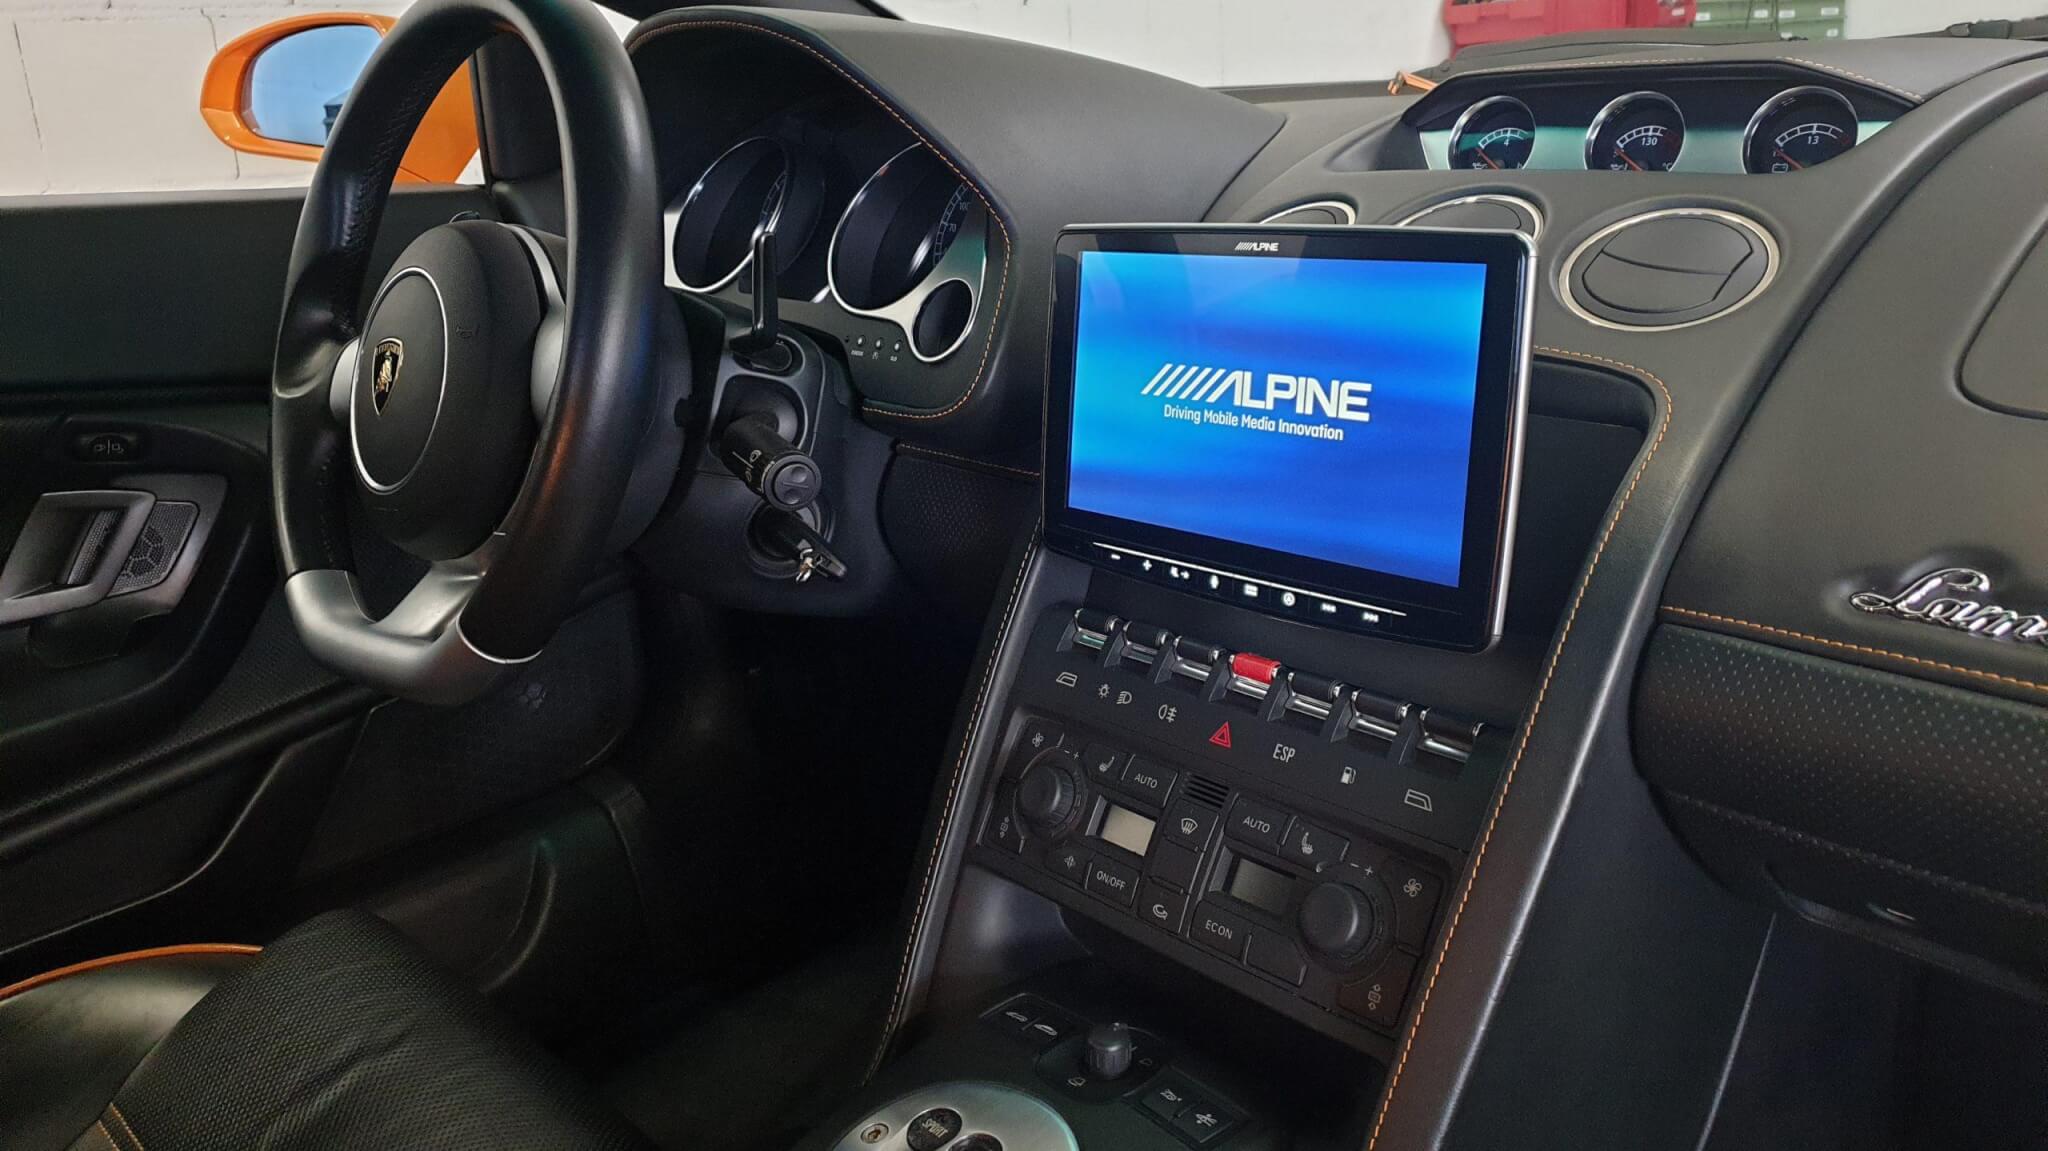 Lamborghini Gallardo: Alpine Multimedia-Navigationssystem